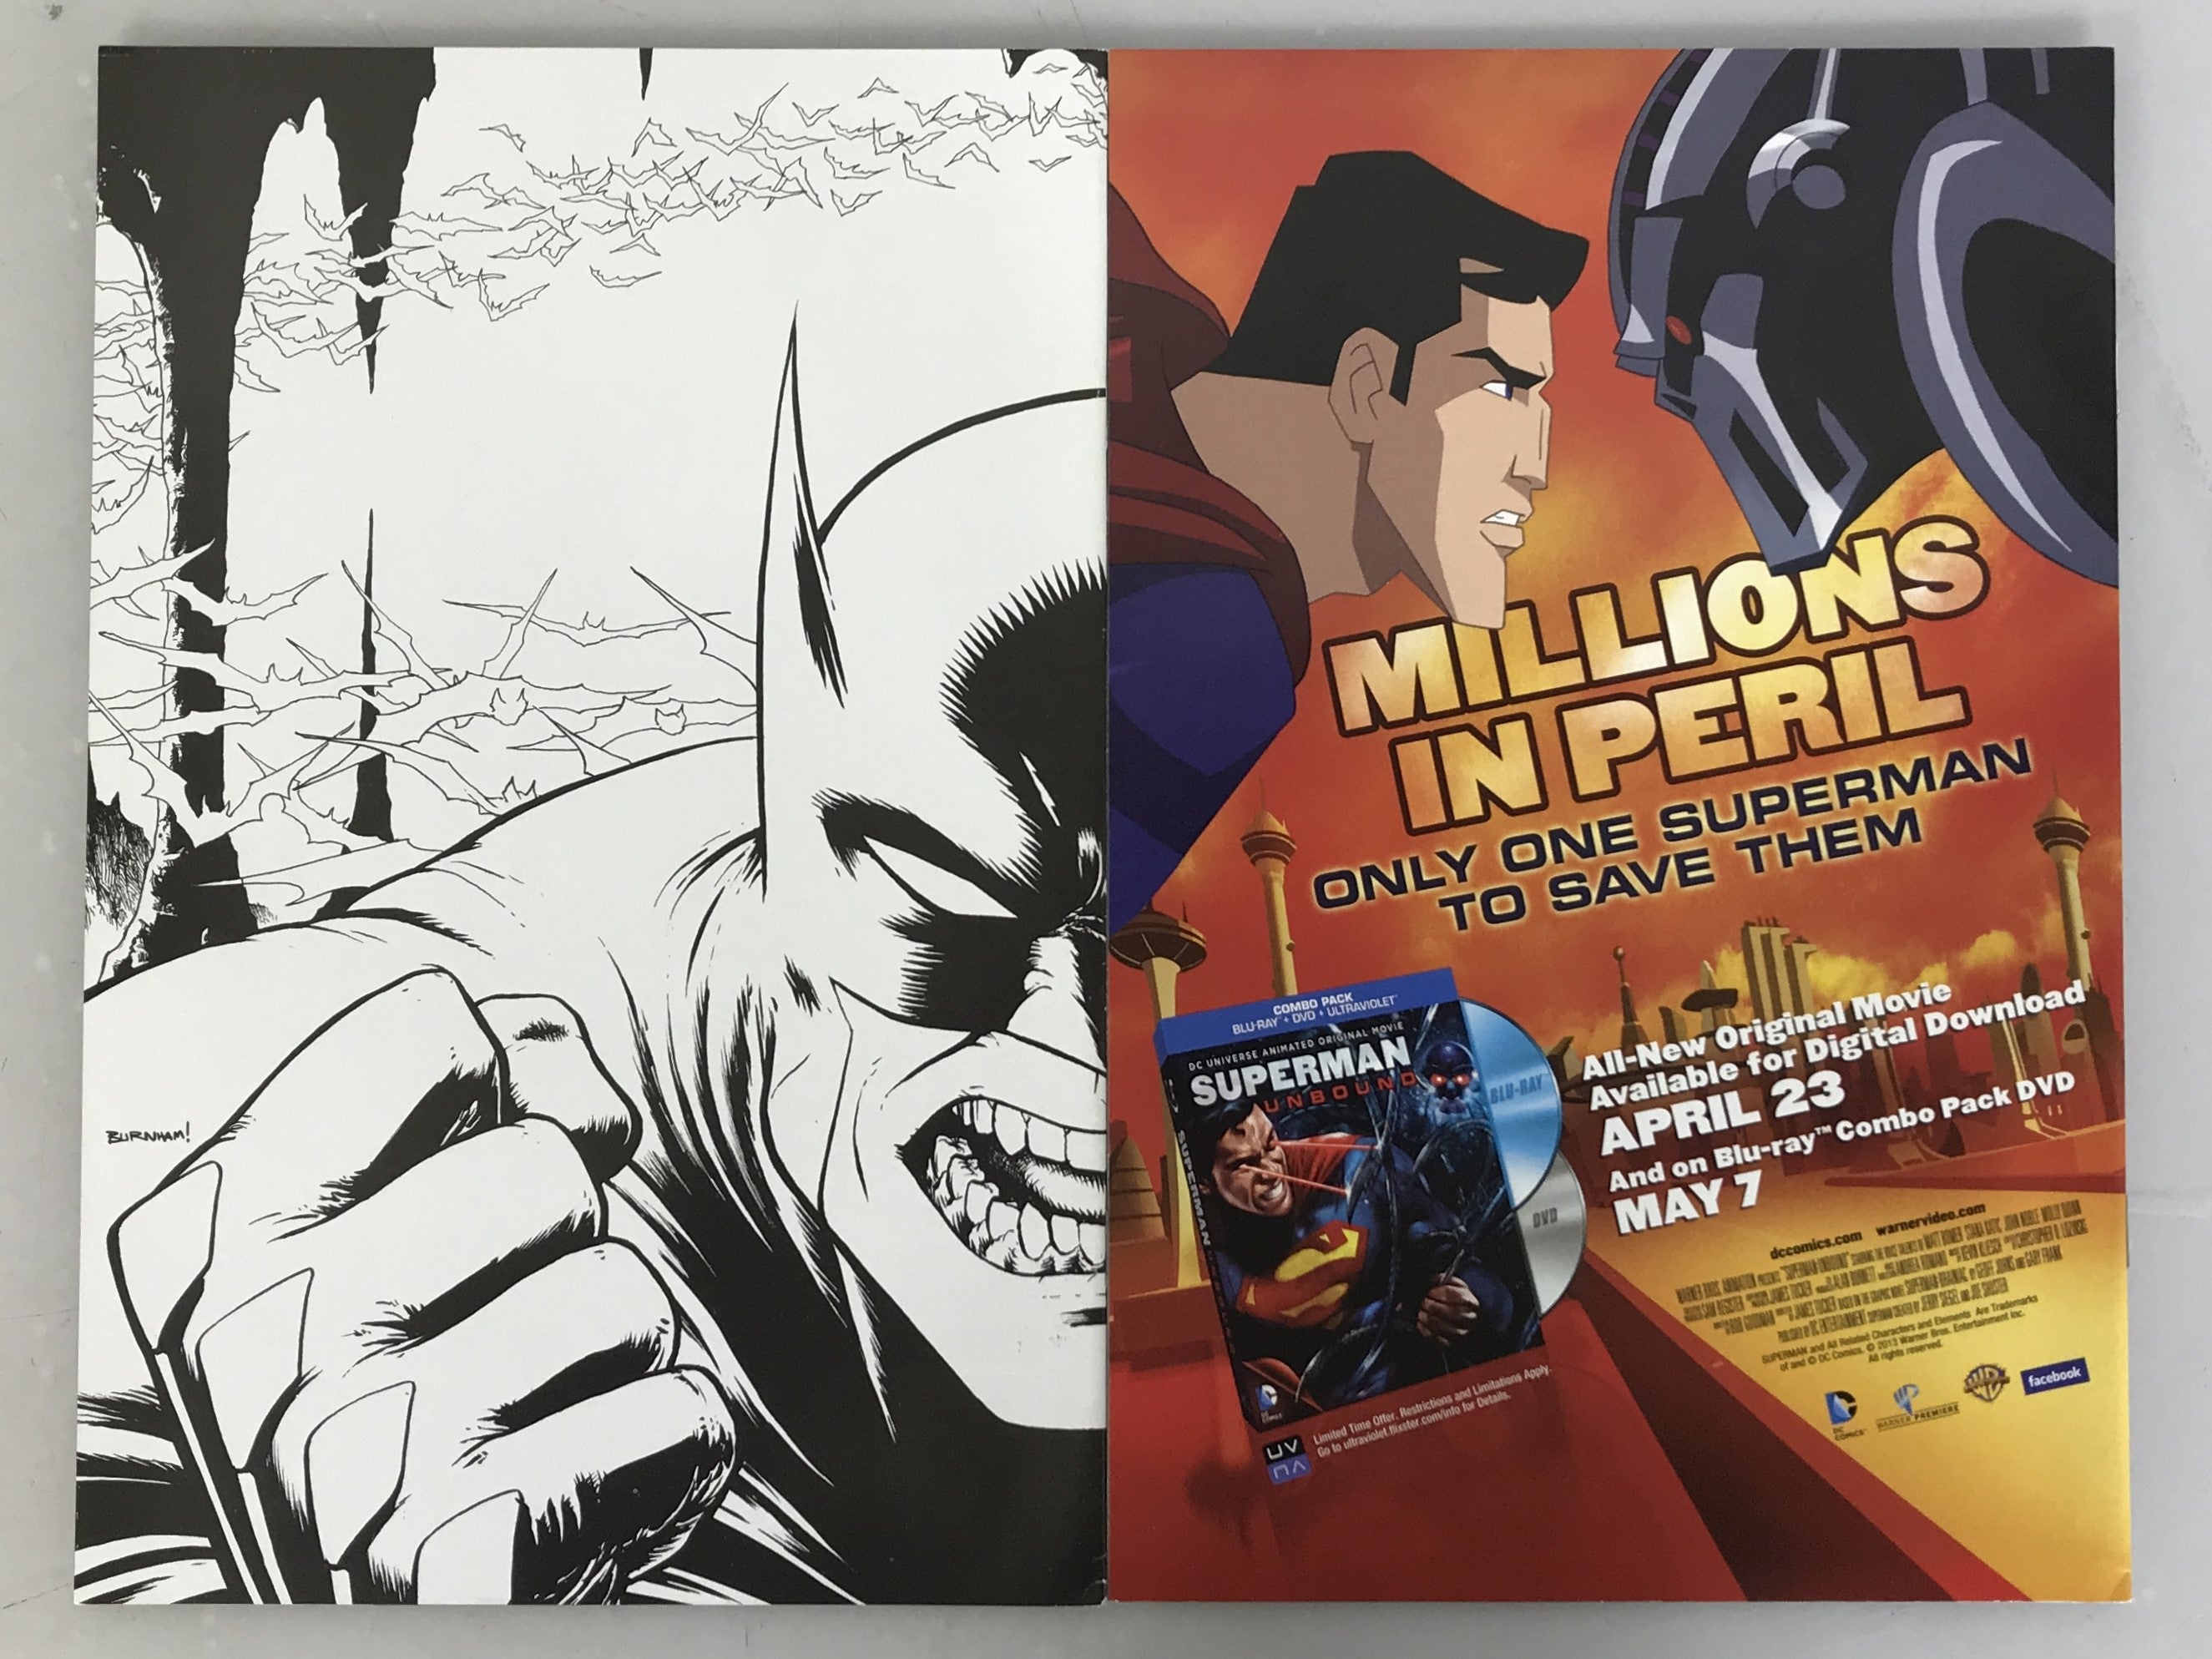 Batman Incorporated 10-11 2013